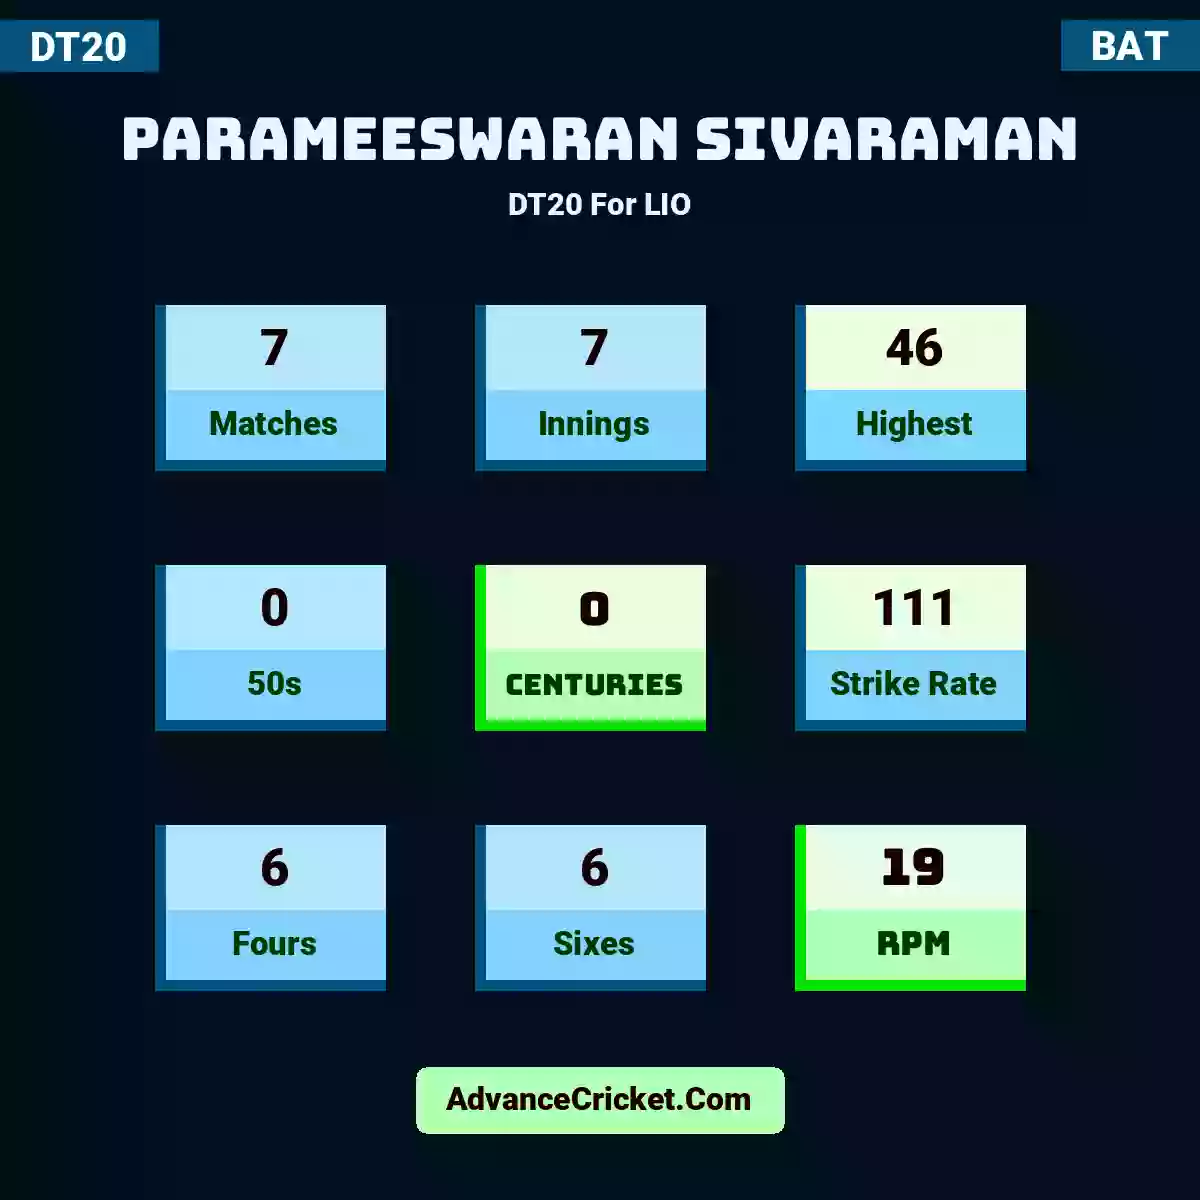 Parameeswaran Sivaraman DT20  For LIO, Parameeswaran Sivaraman played 7 matches, scored 46 runs as highest, 0 half-centuries, and 0 centuries, with a strike rate of 111. P.Sivaraman hit 6 fours and 6 sixes, with an RPM of 19.